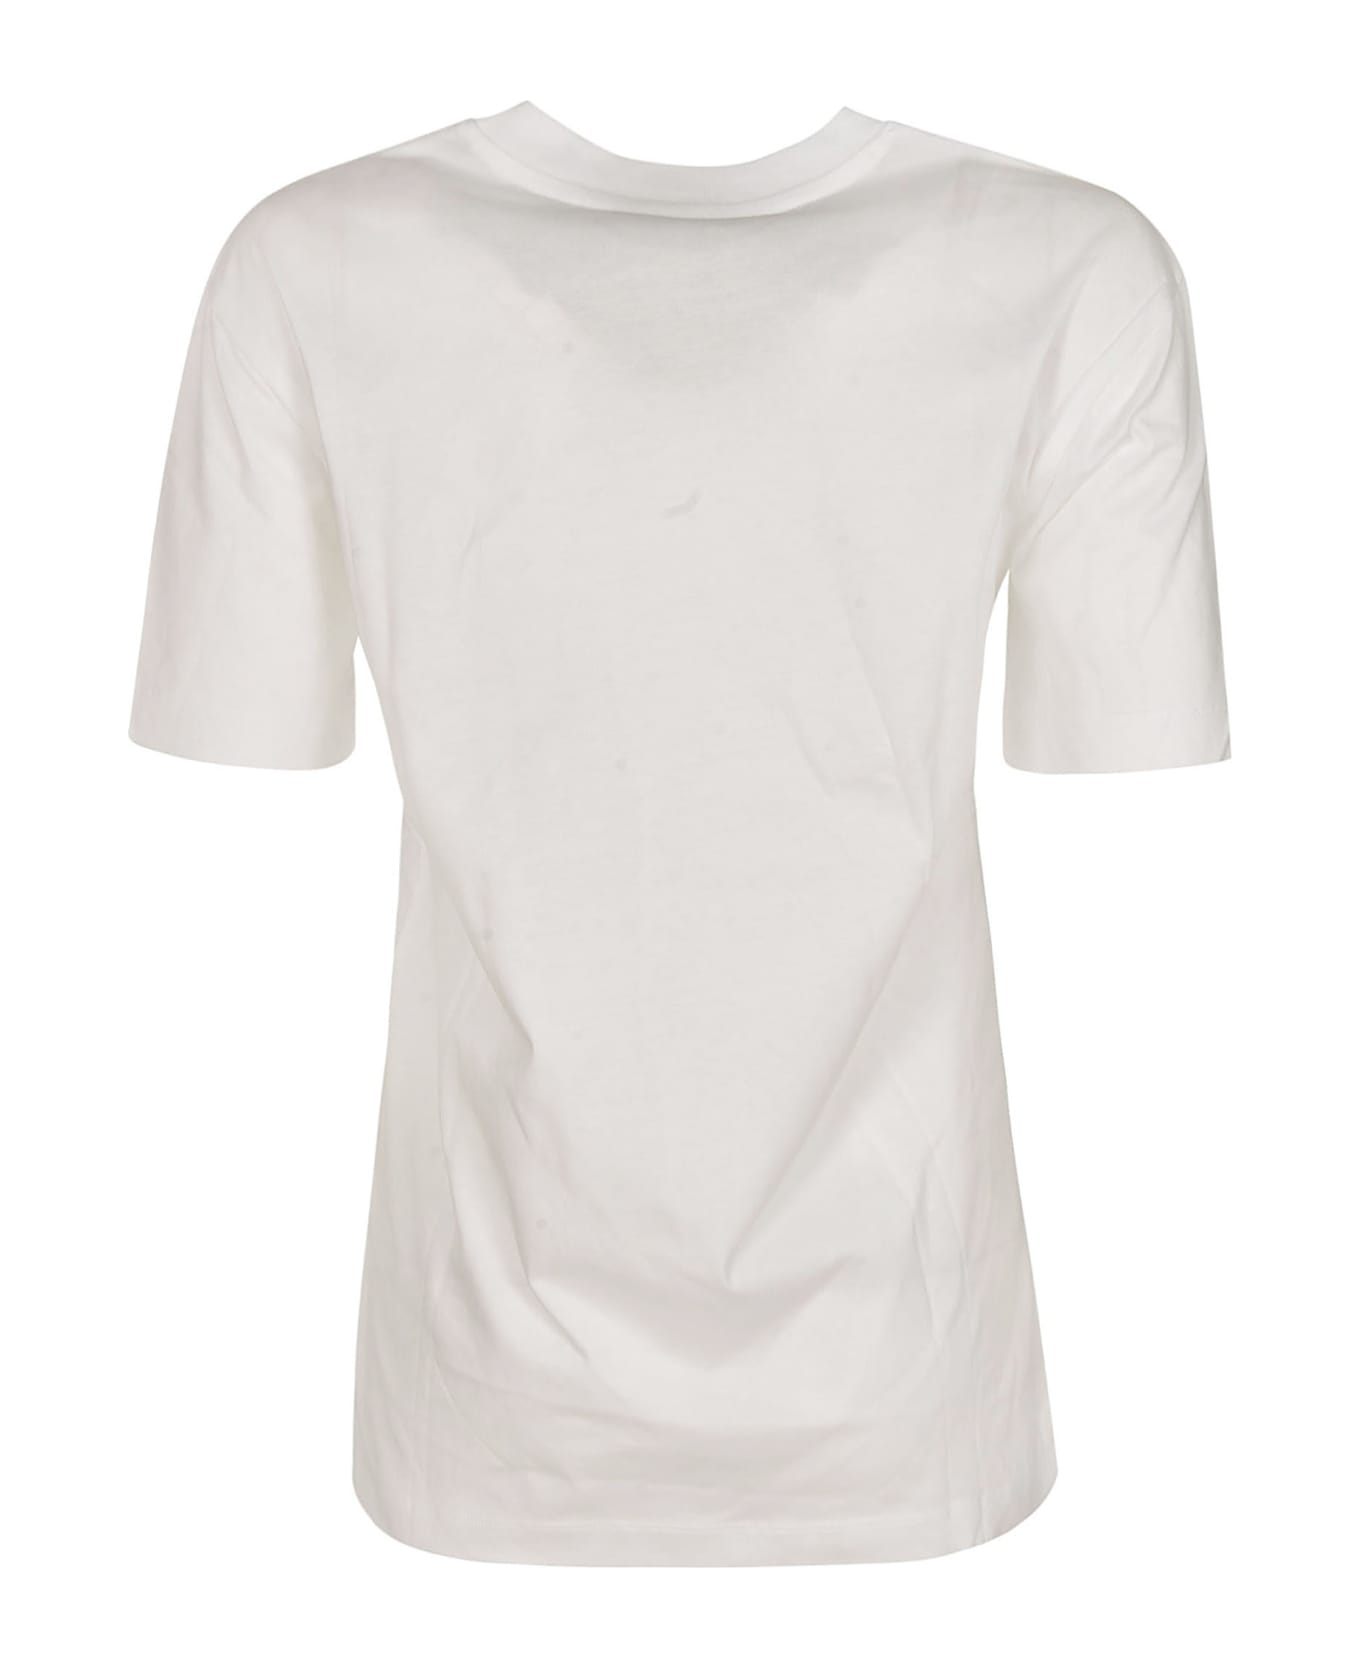 Patou Iconic Signature T-shirt - White